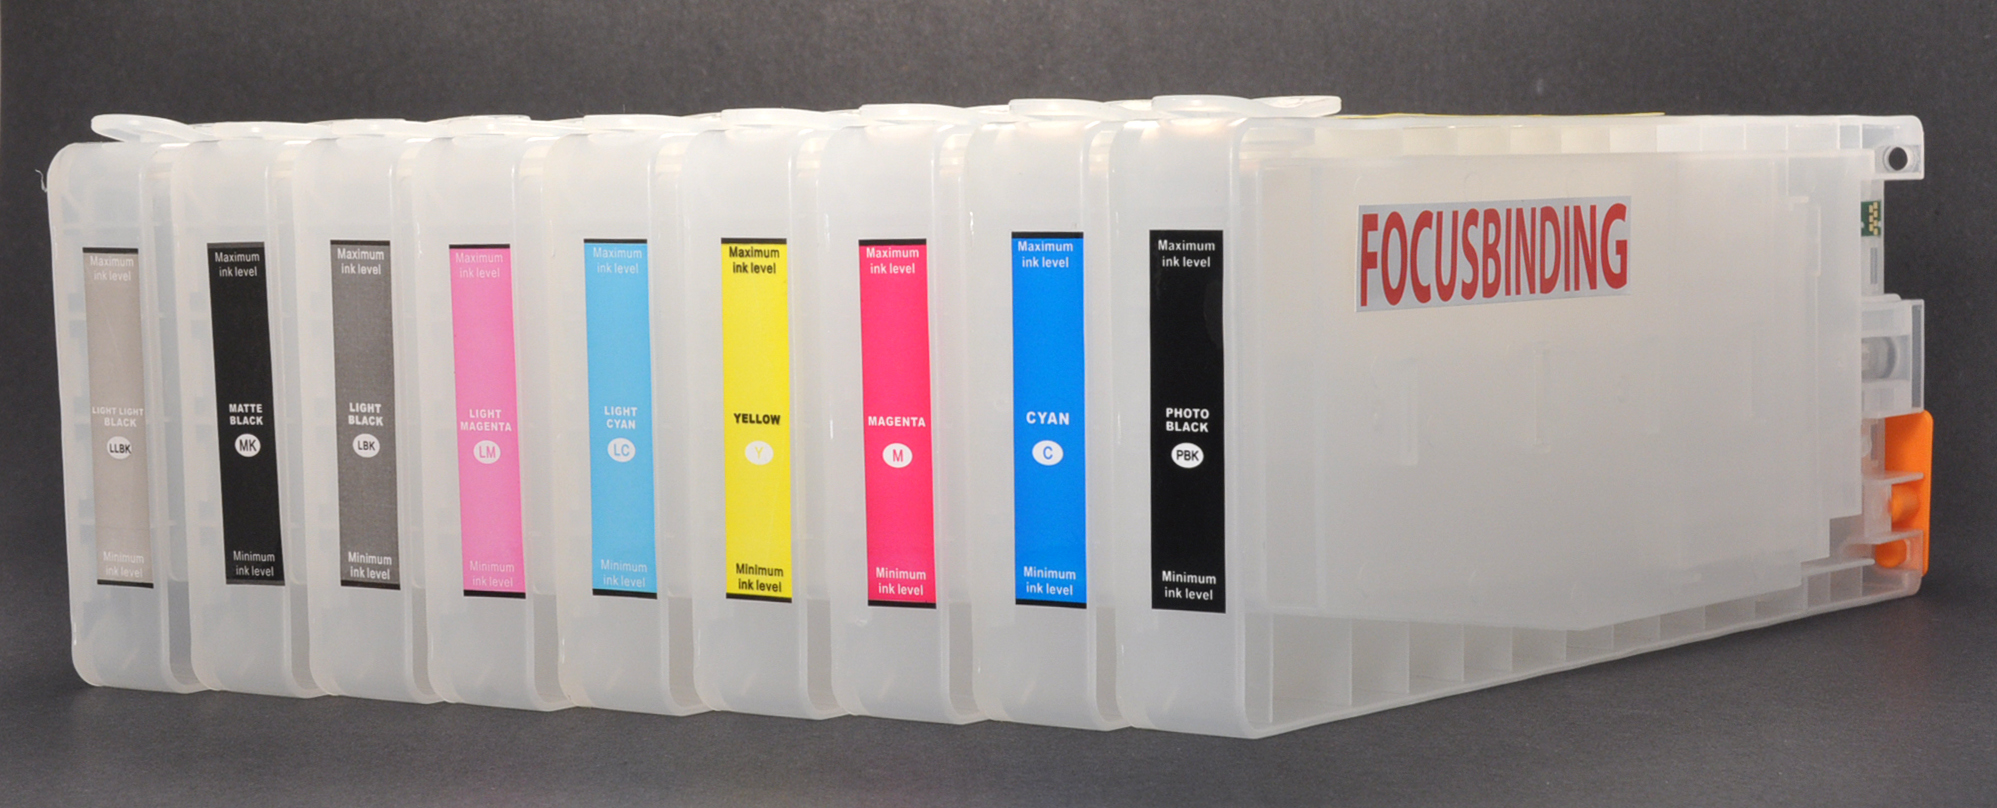 Refillable Ink Cartridges